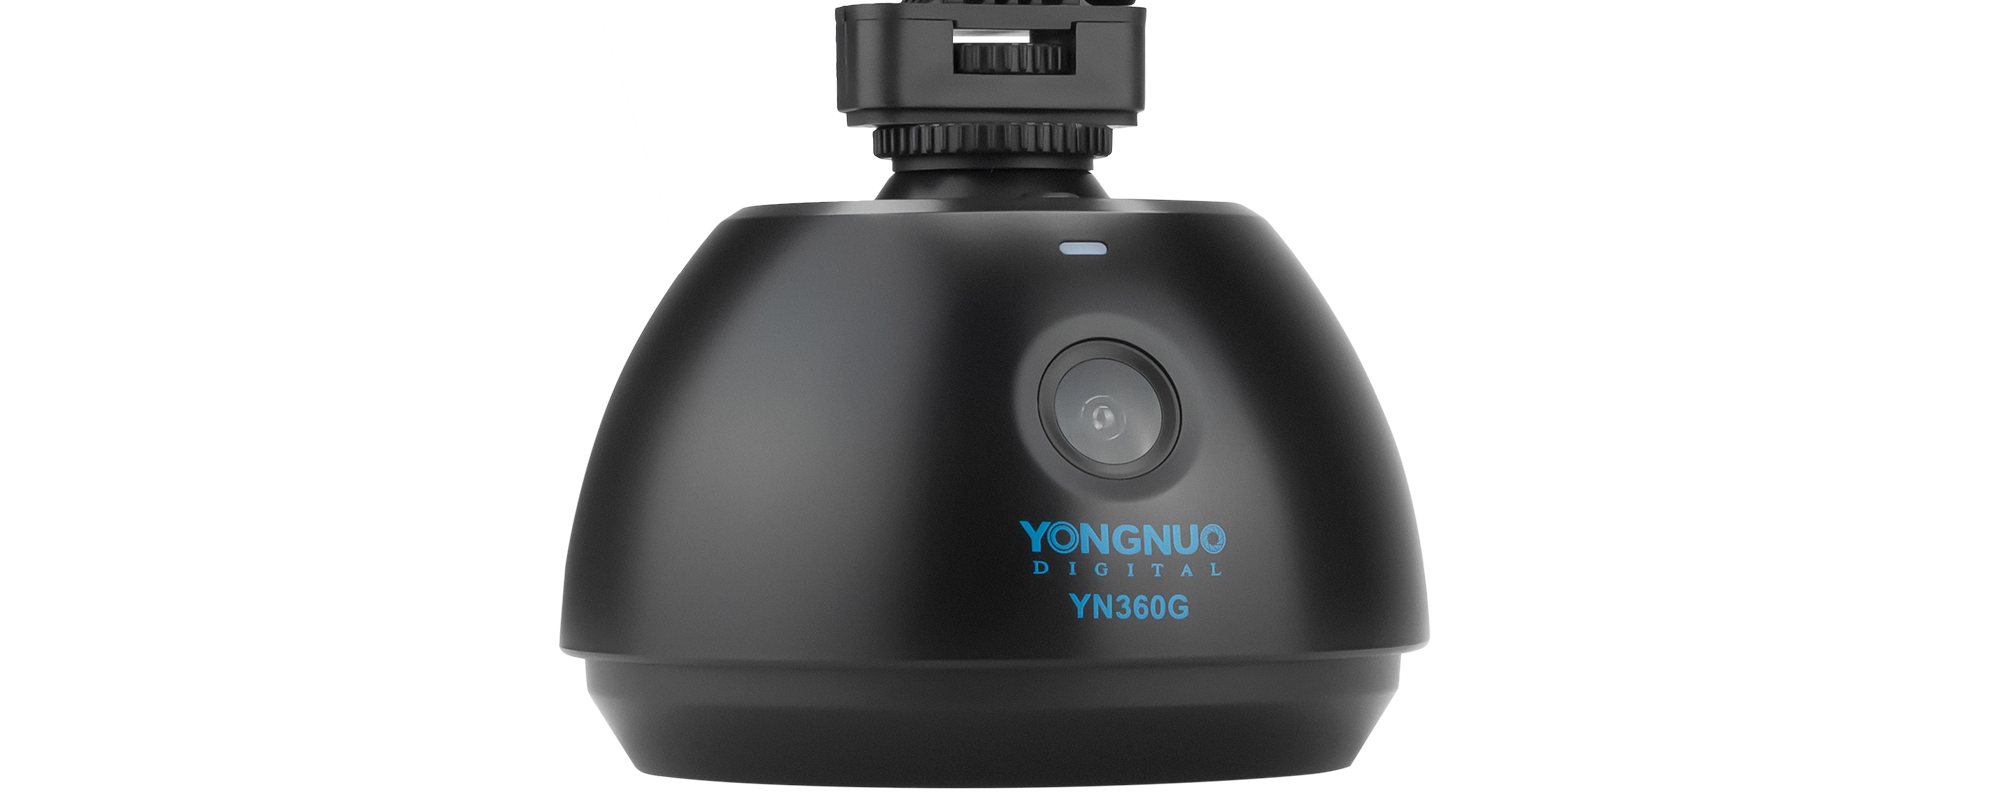 Yongnuo YN360G Auto Head - Up to 5 metres range